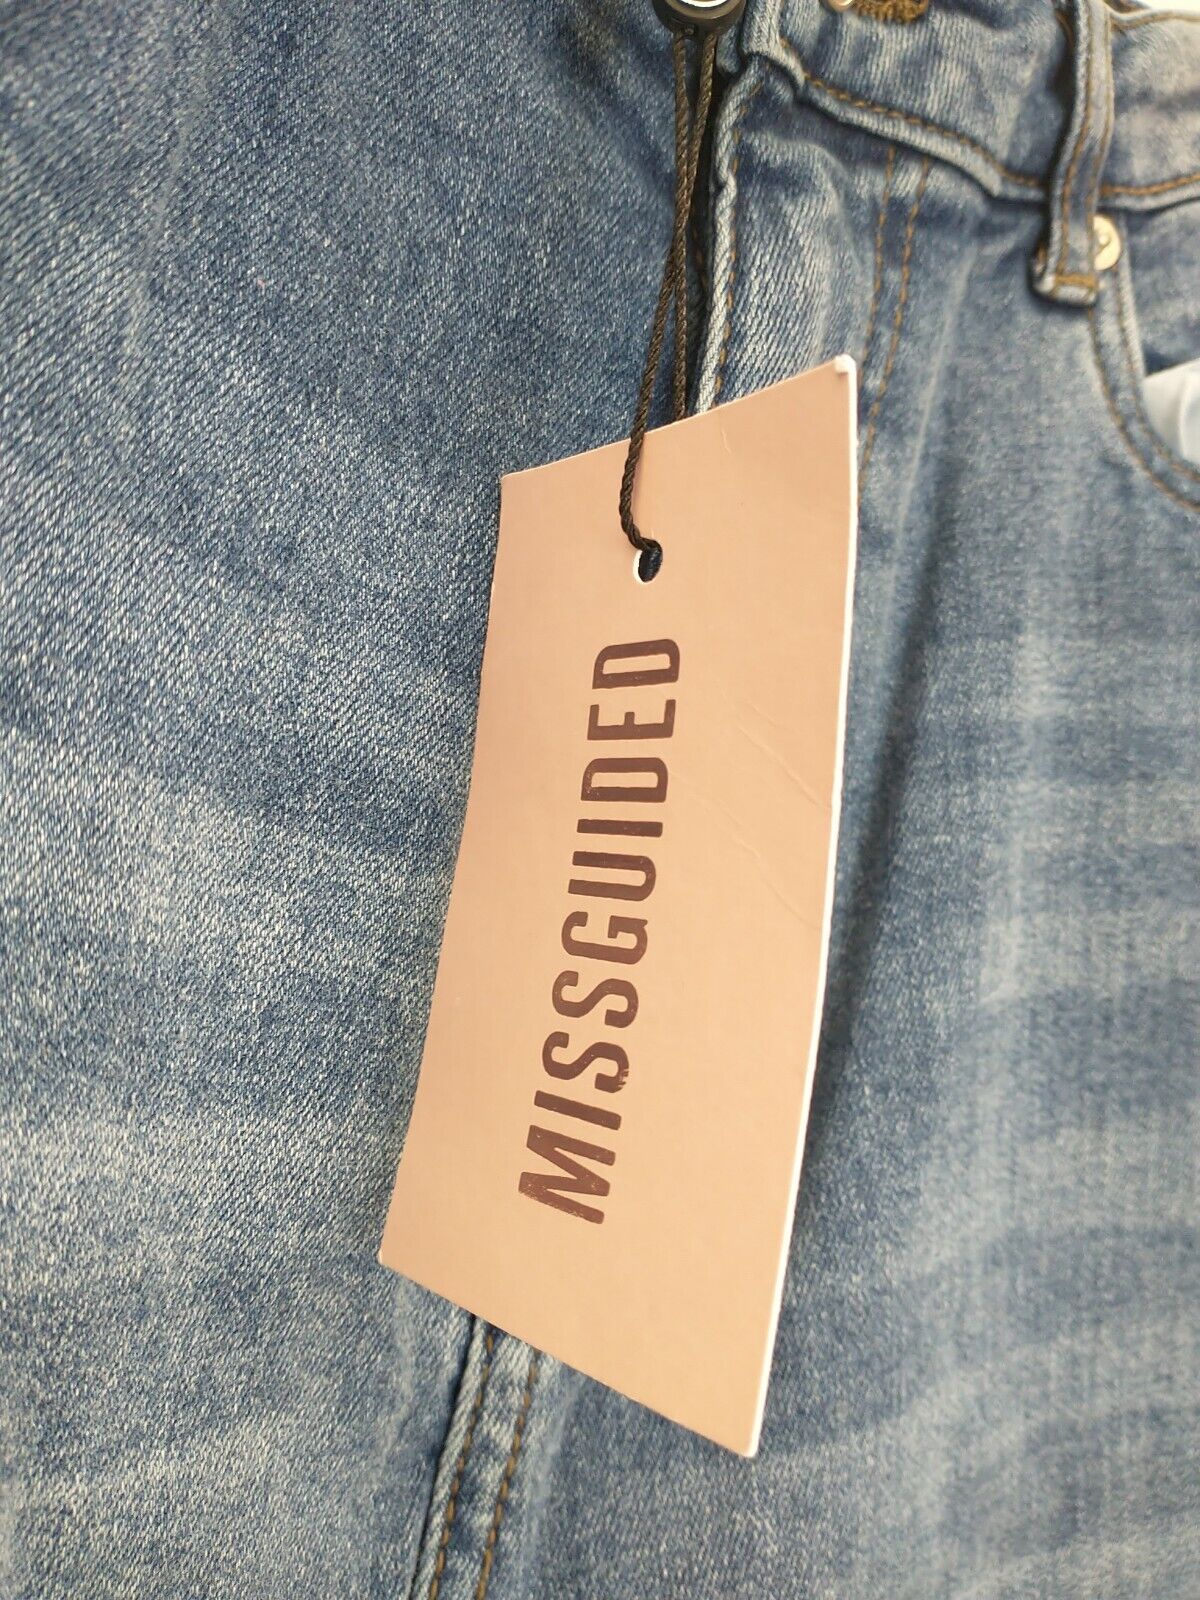 Missguided Slim Fit Flared Jeans Size UK 10 **** V233